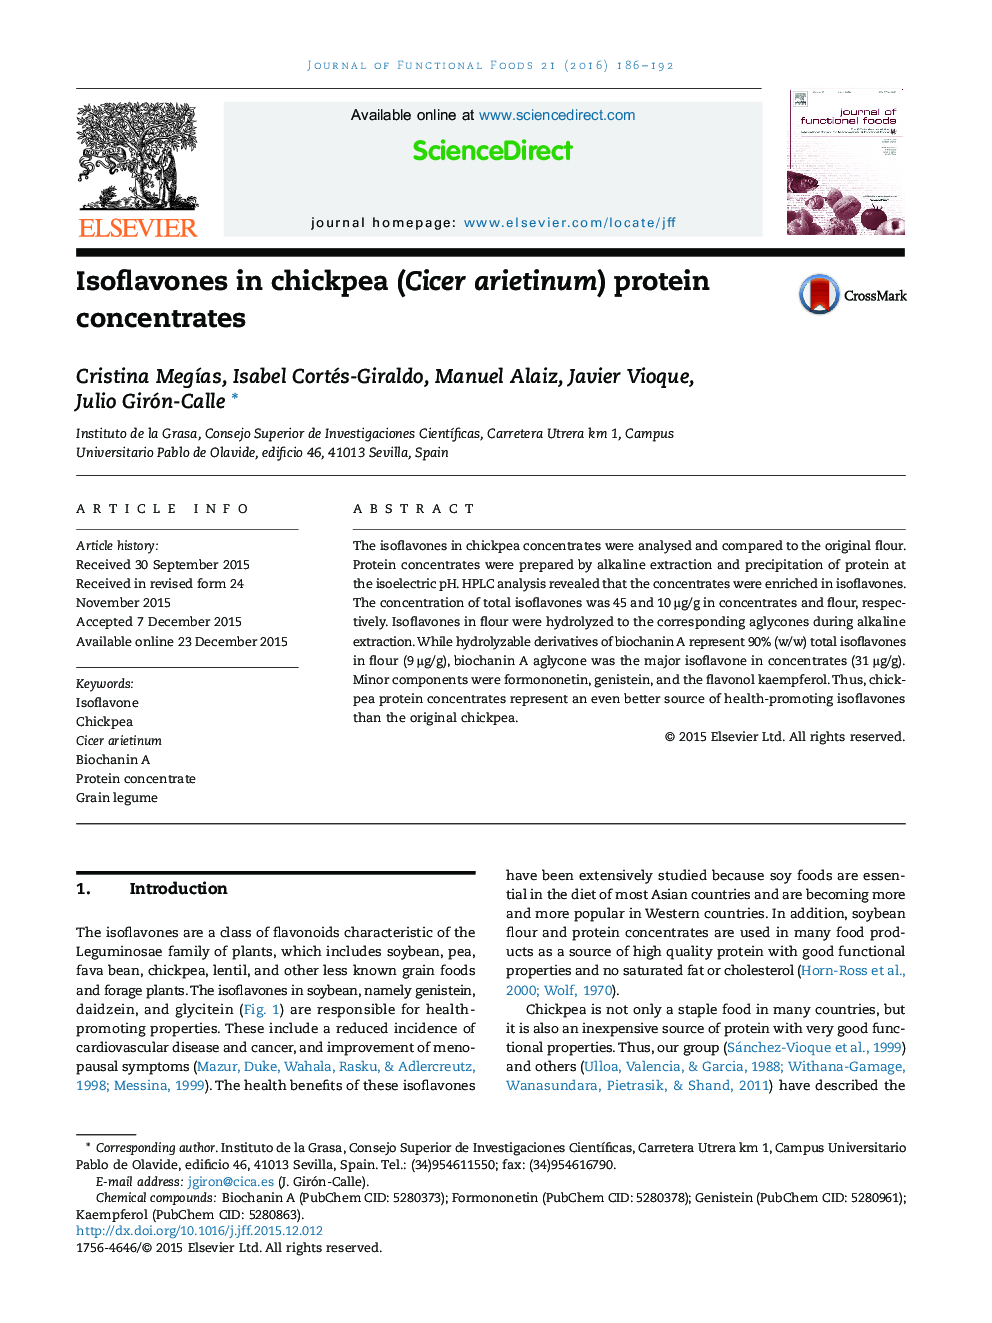 Isoflavones in chickpea (Cicer arietinum) protein concentrates